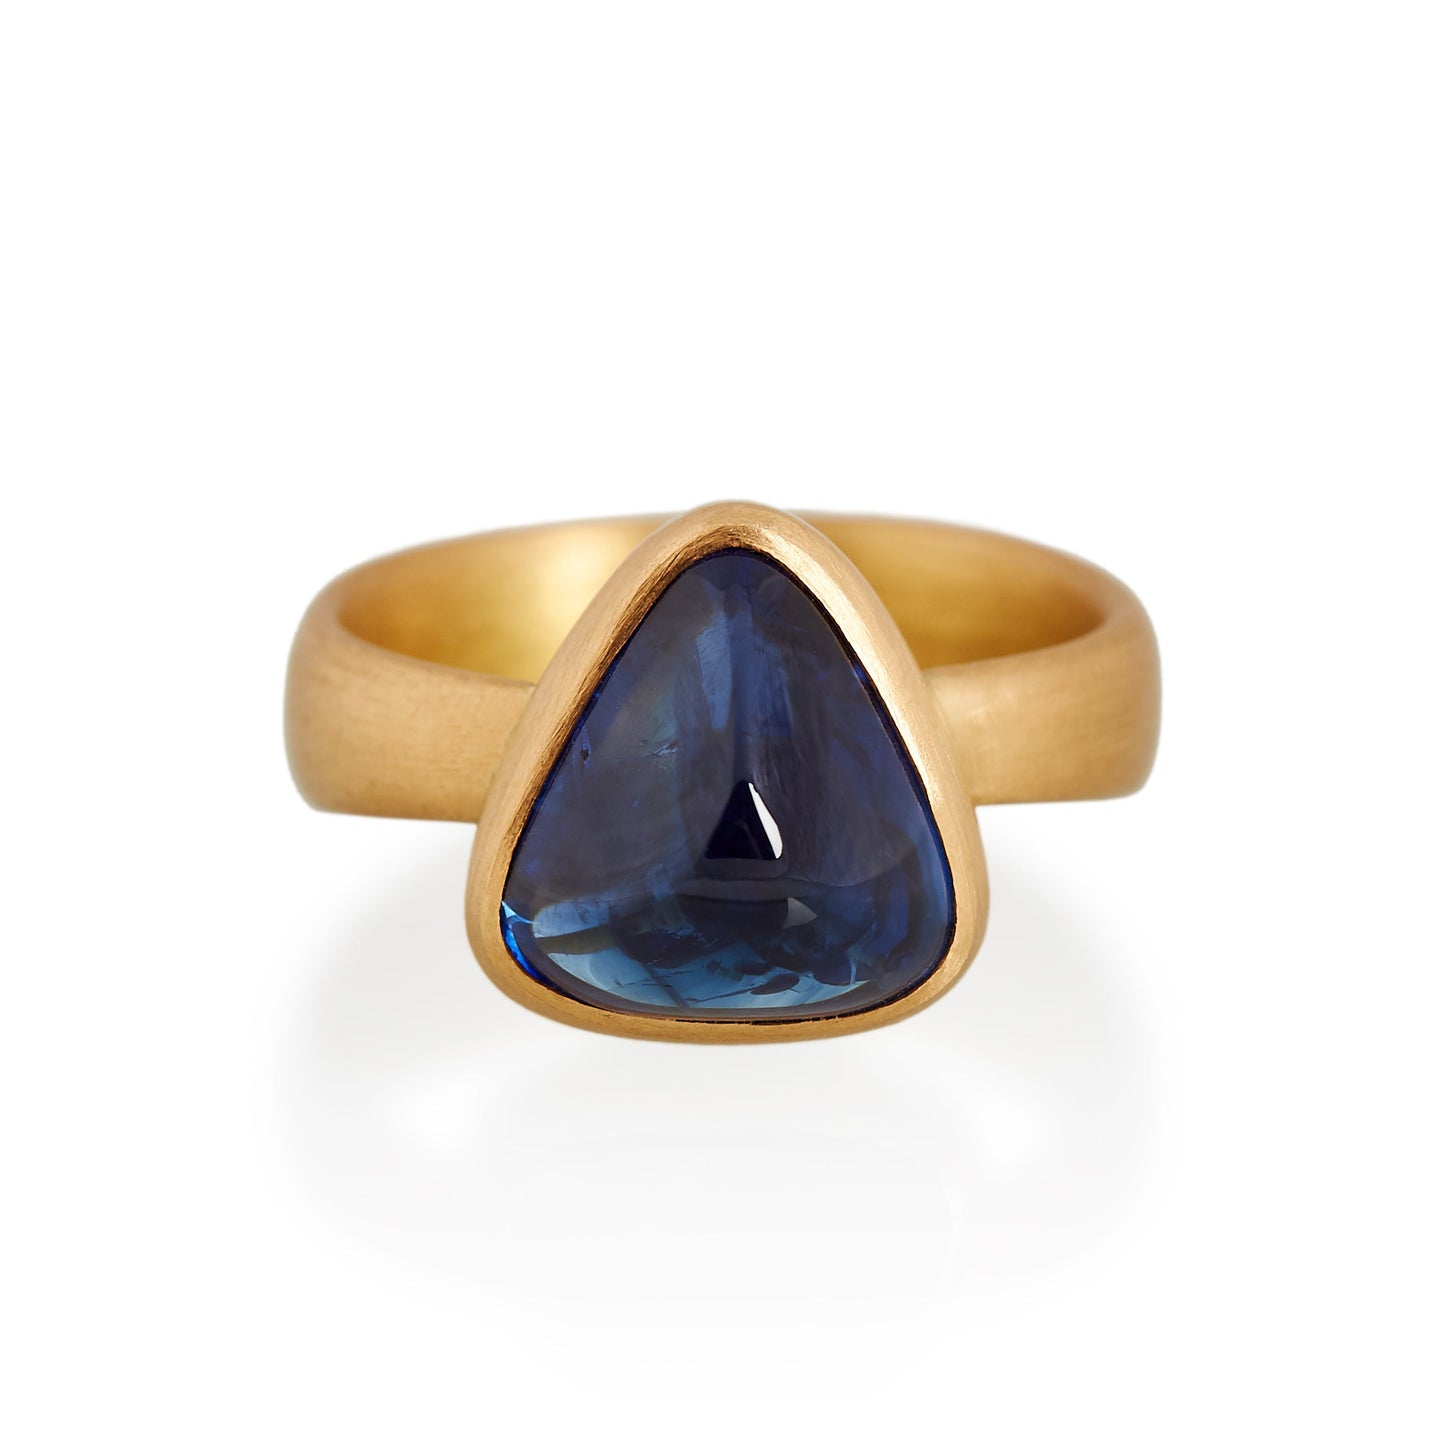 Sugarloaf Cut Sapphire Ring, 22ct Gold